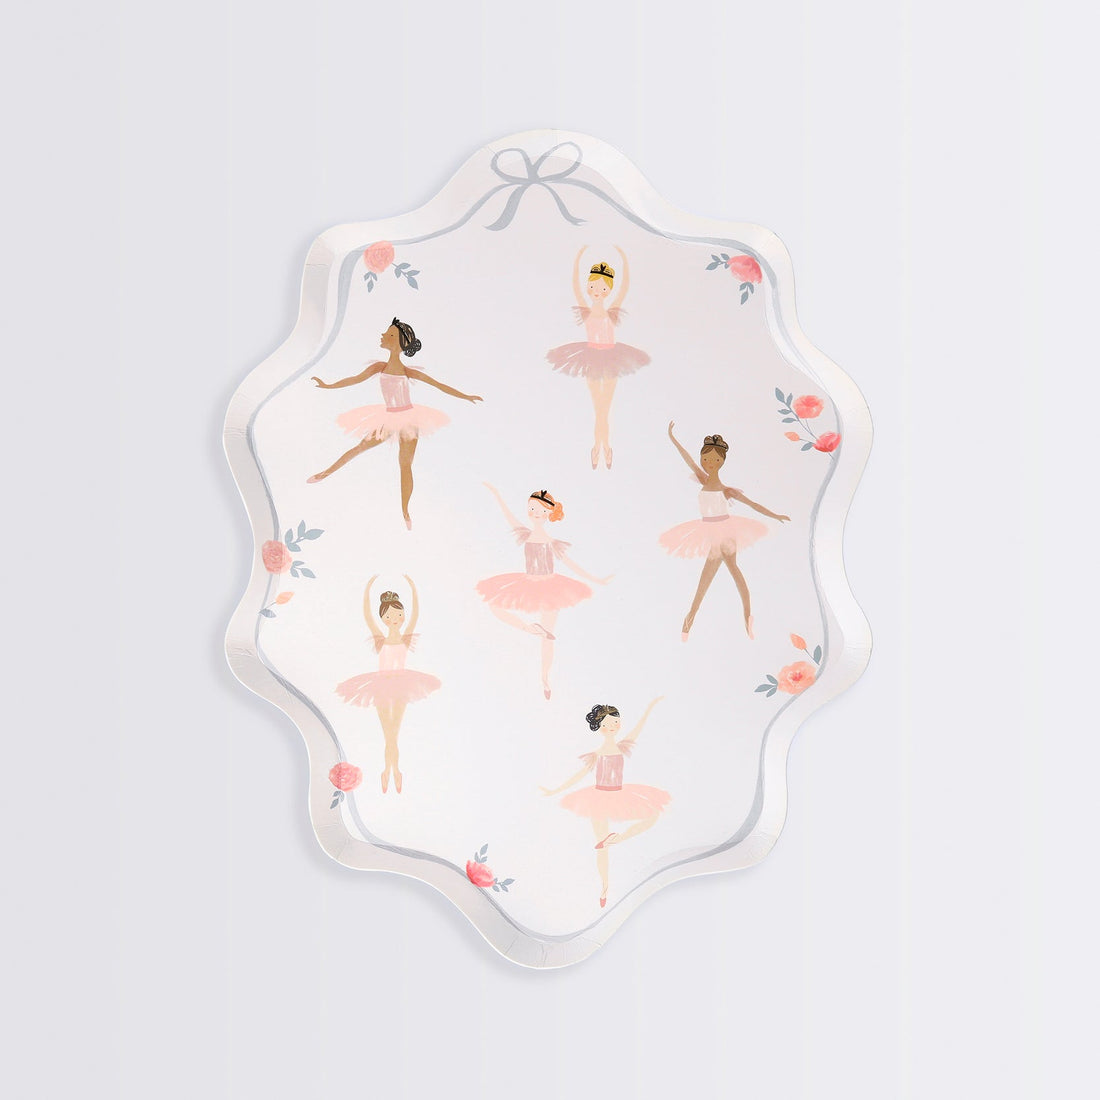 A high-quality mirror with Meri Meri Ballerina Plates on it.